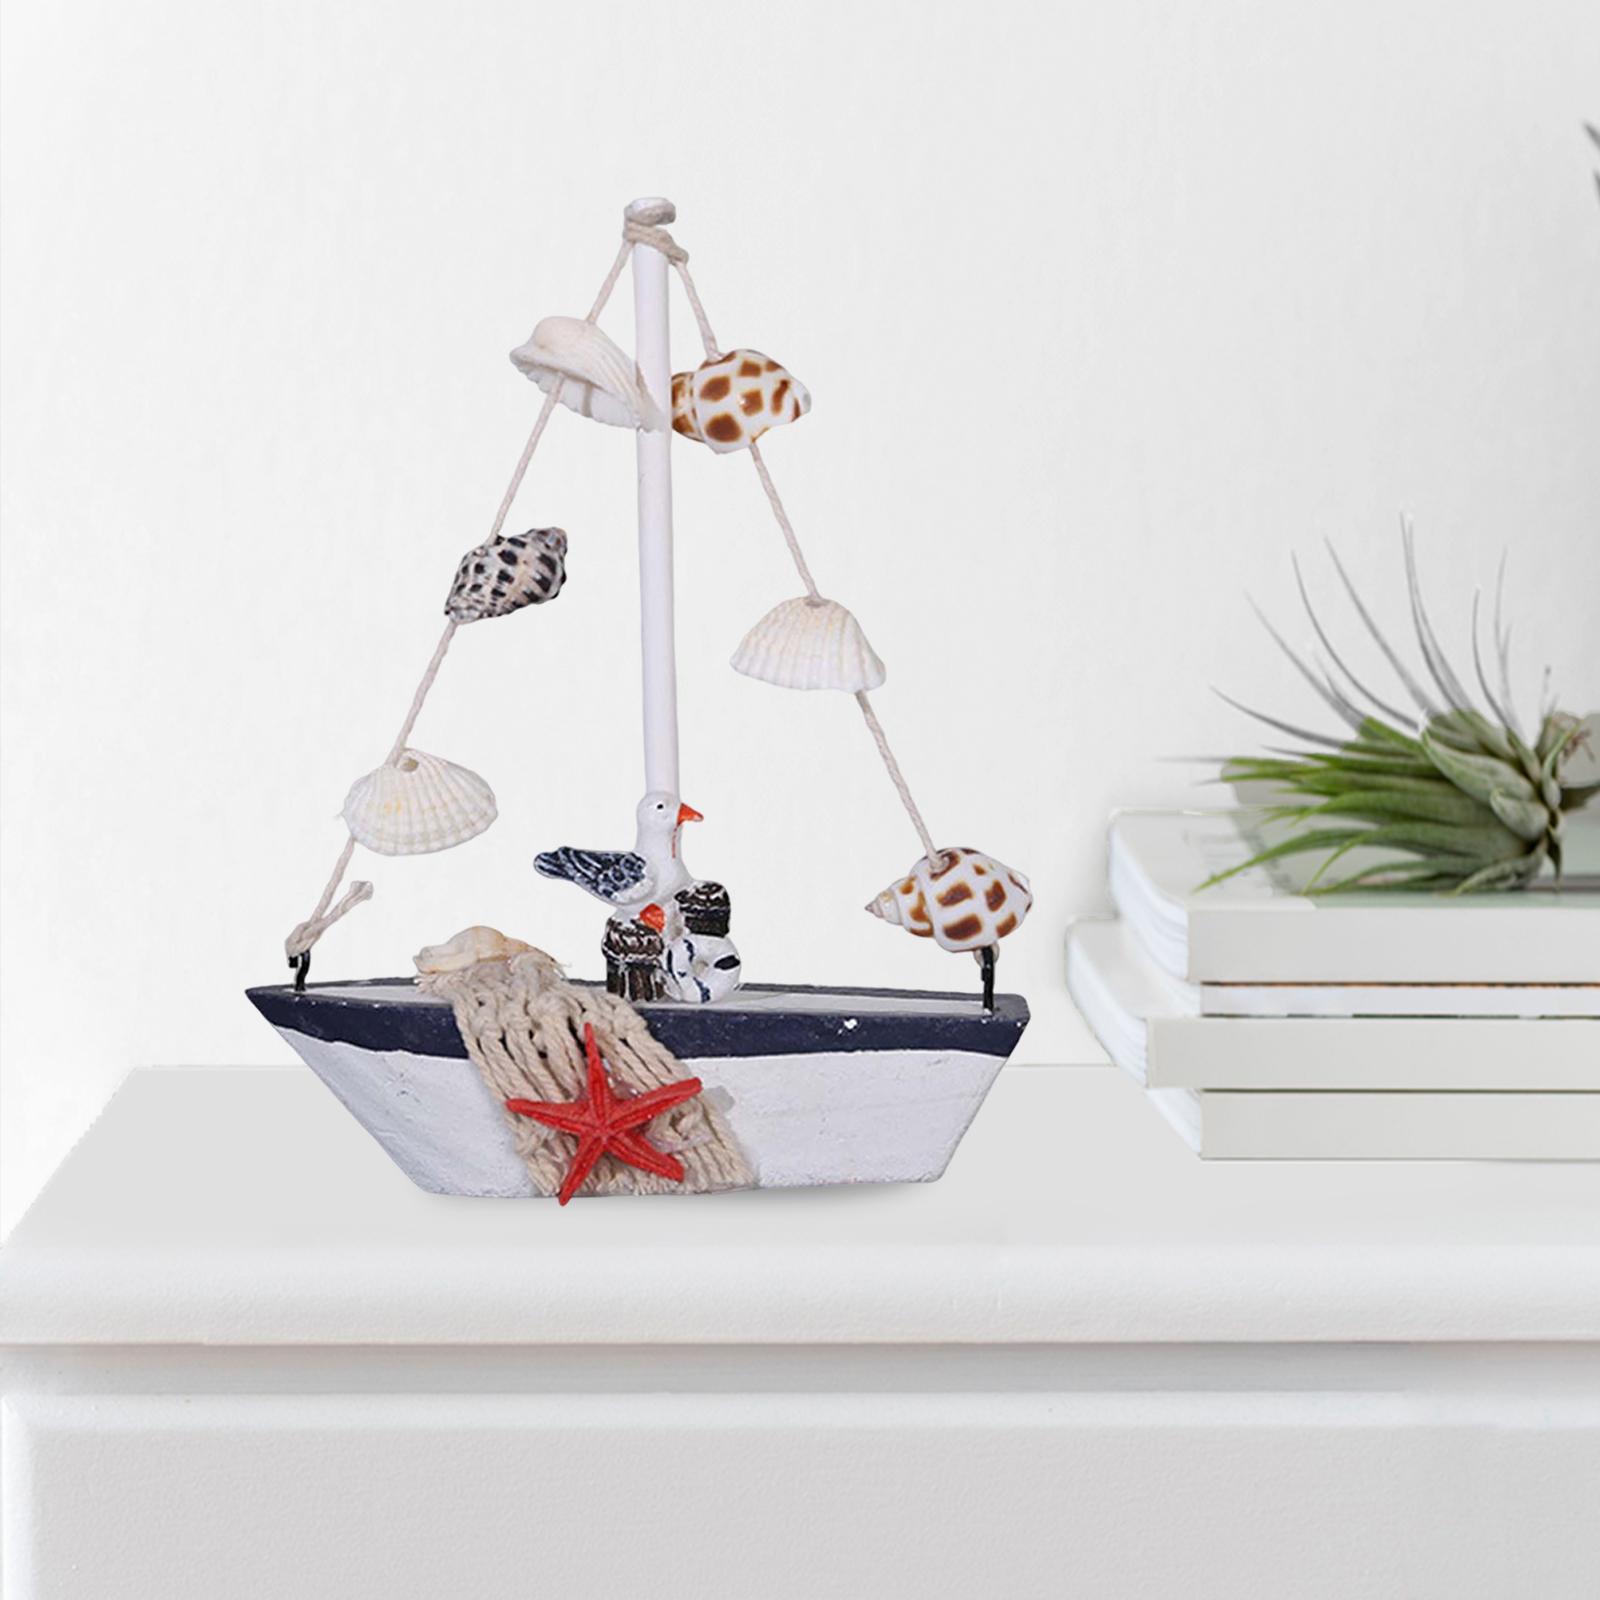 Sailboat Model Decor Ornament Wooden Sailing Boat Lightweight for Desk Seagull